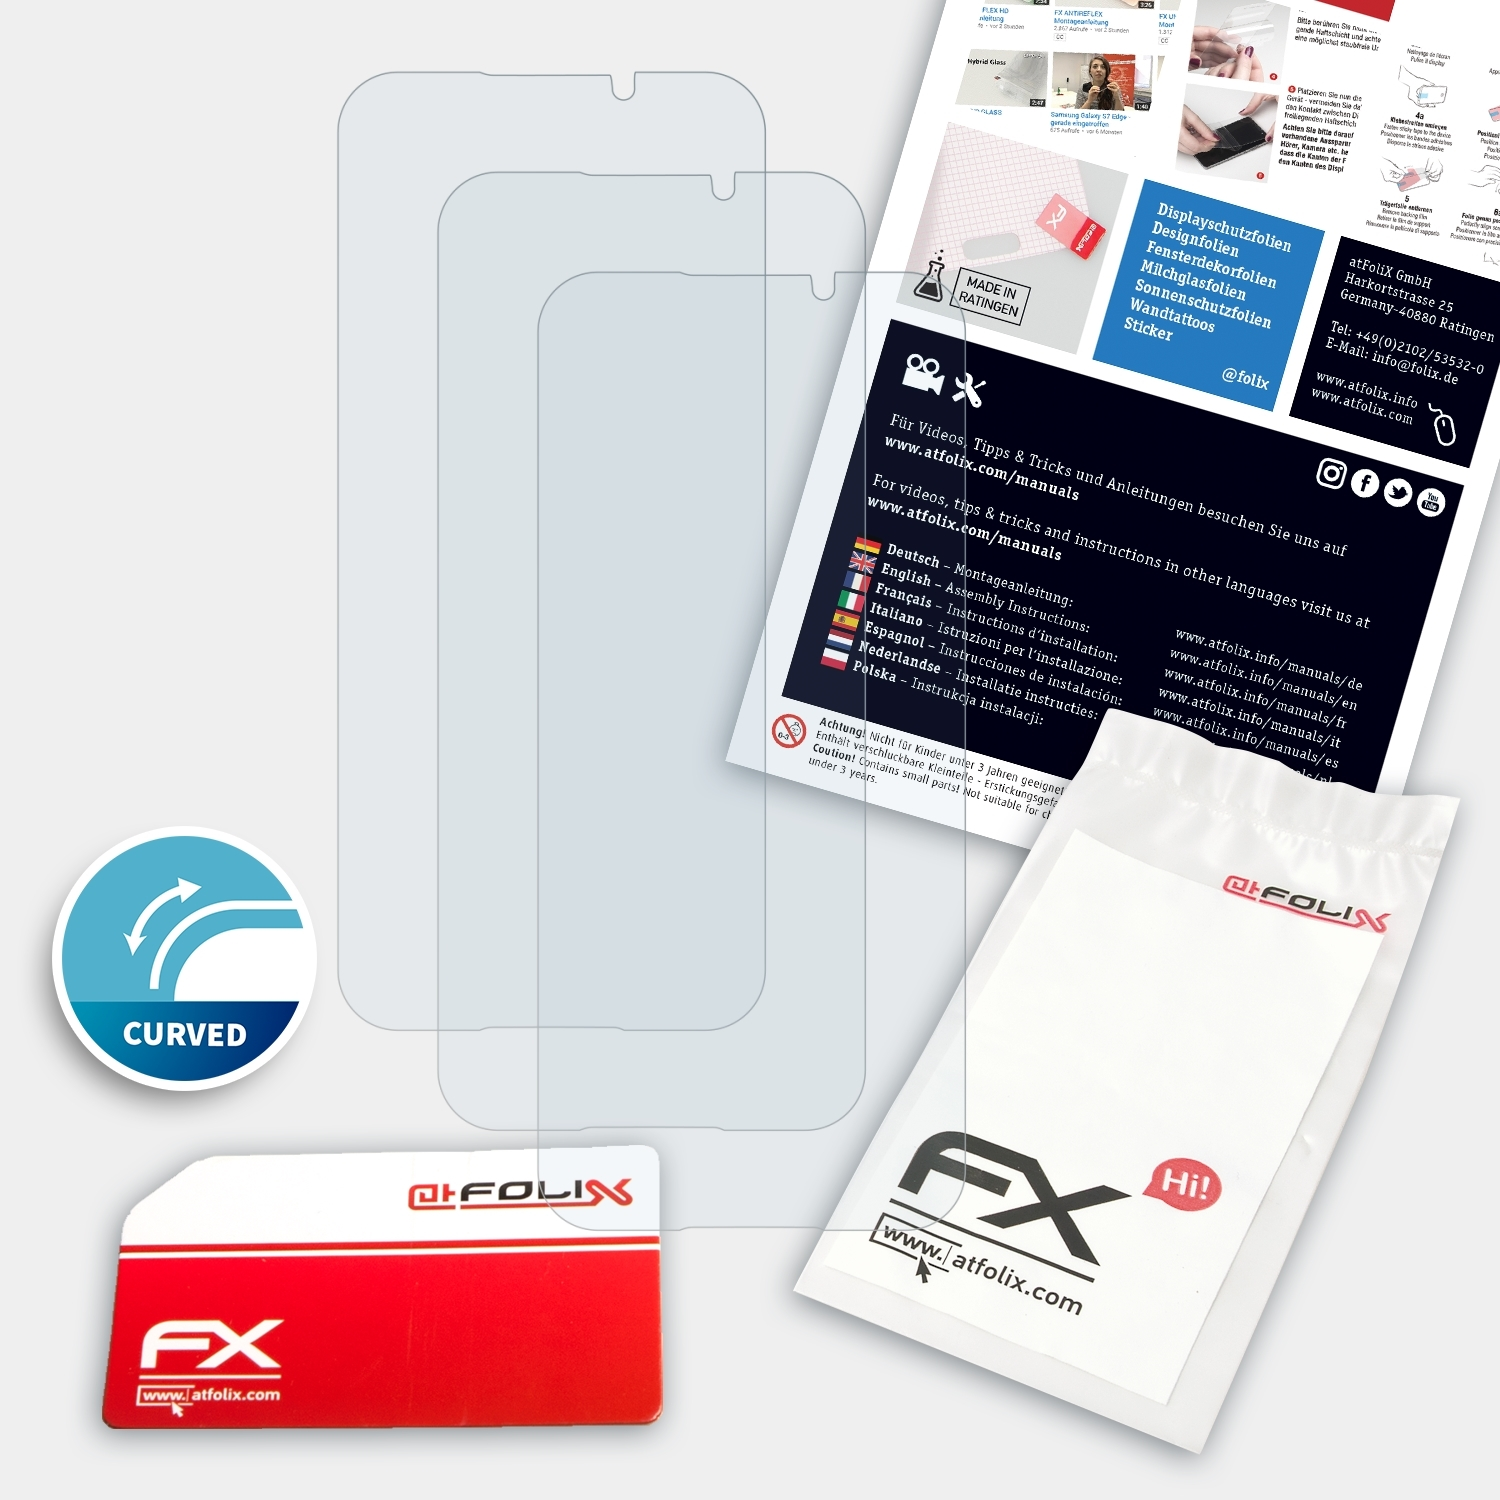 ATFOLIX 3x FX-ActiFleX 2) Xiaomi Black Displayschutz(für Shark